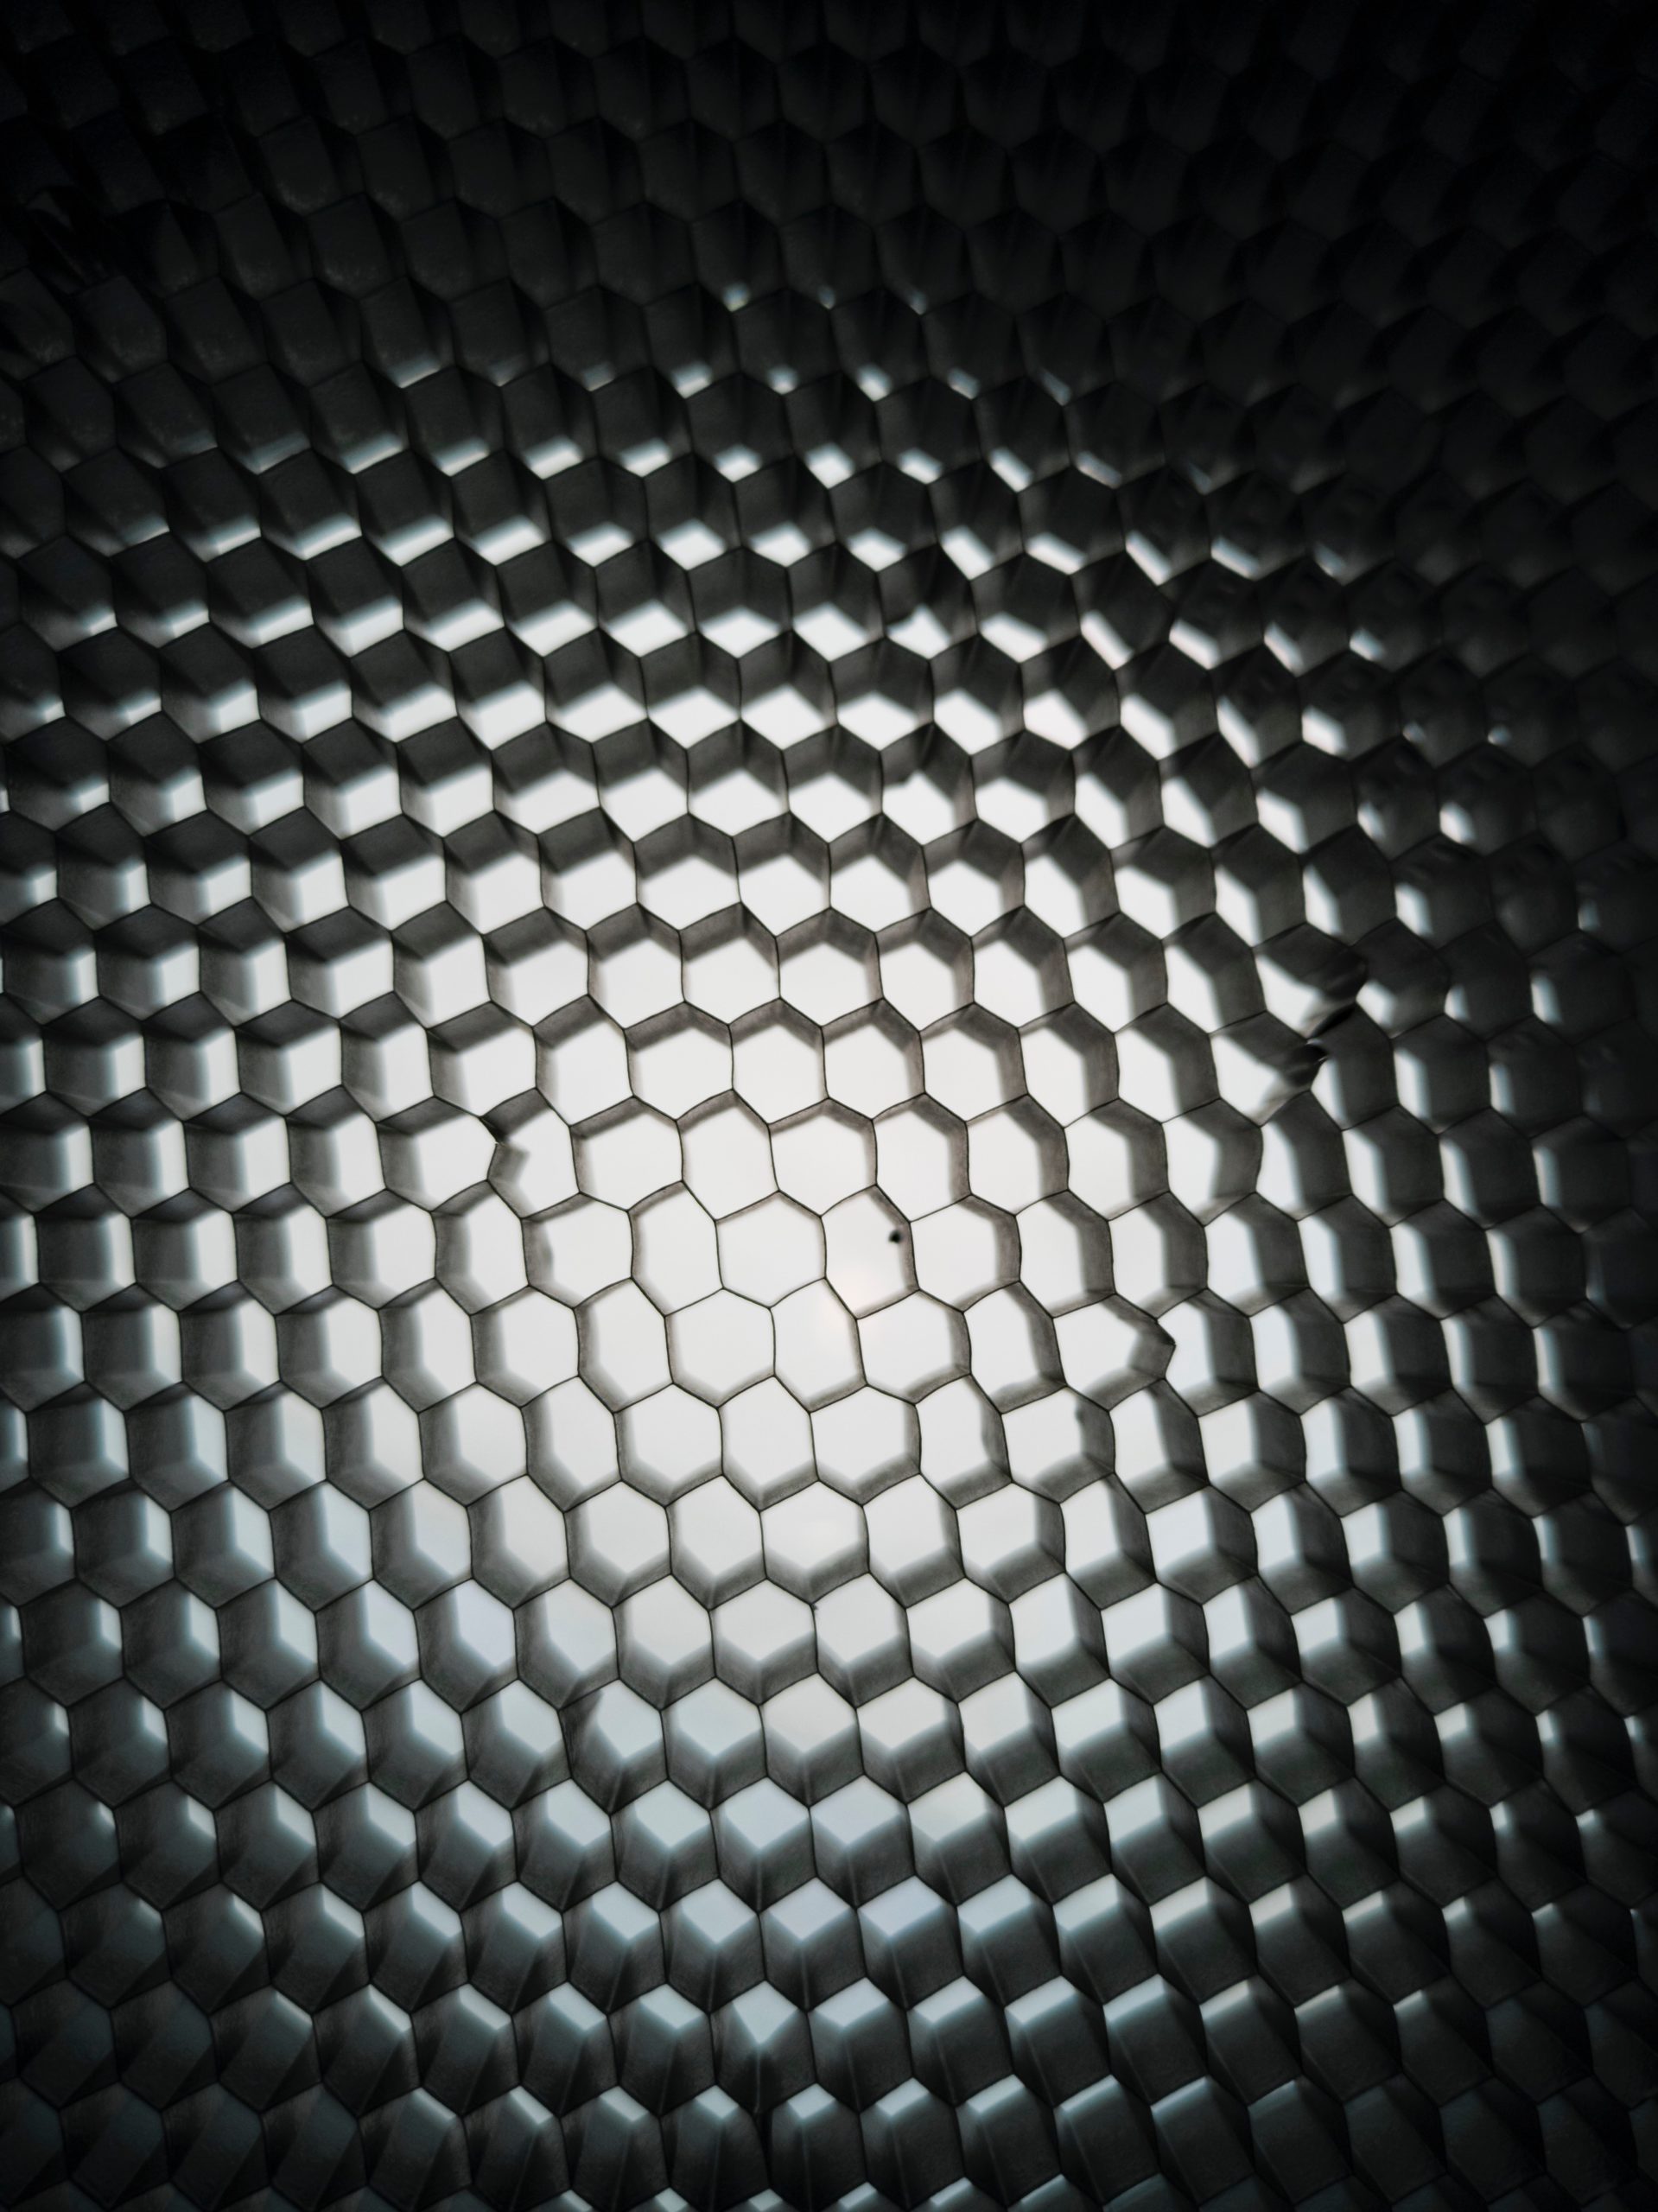 abstract texture of reflective hexagon surface